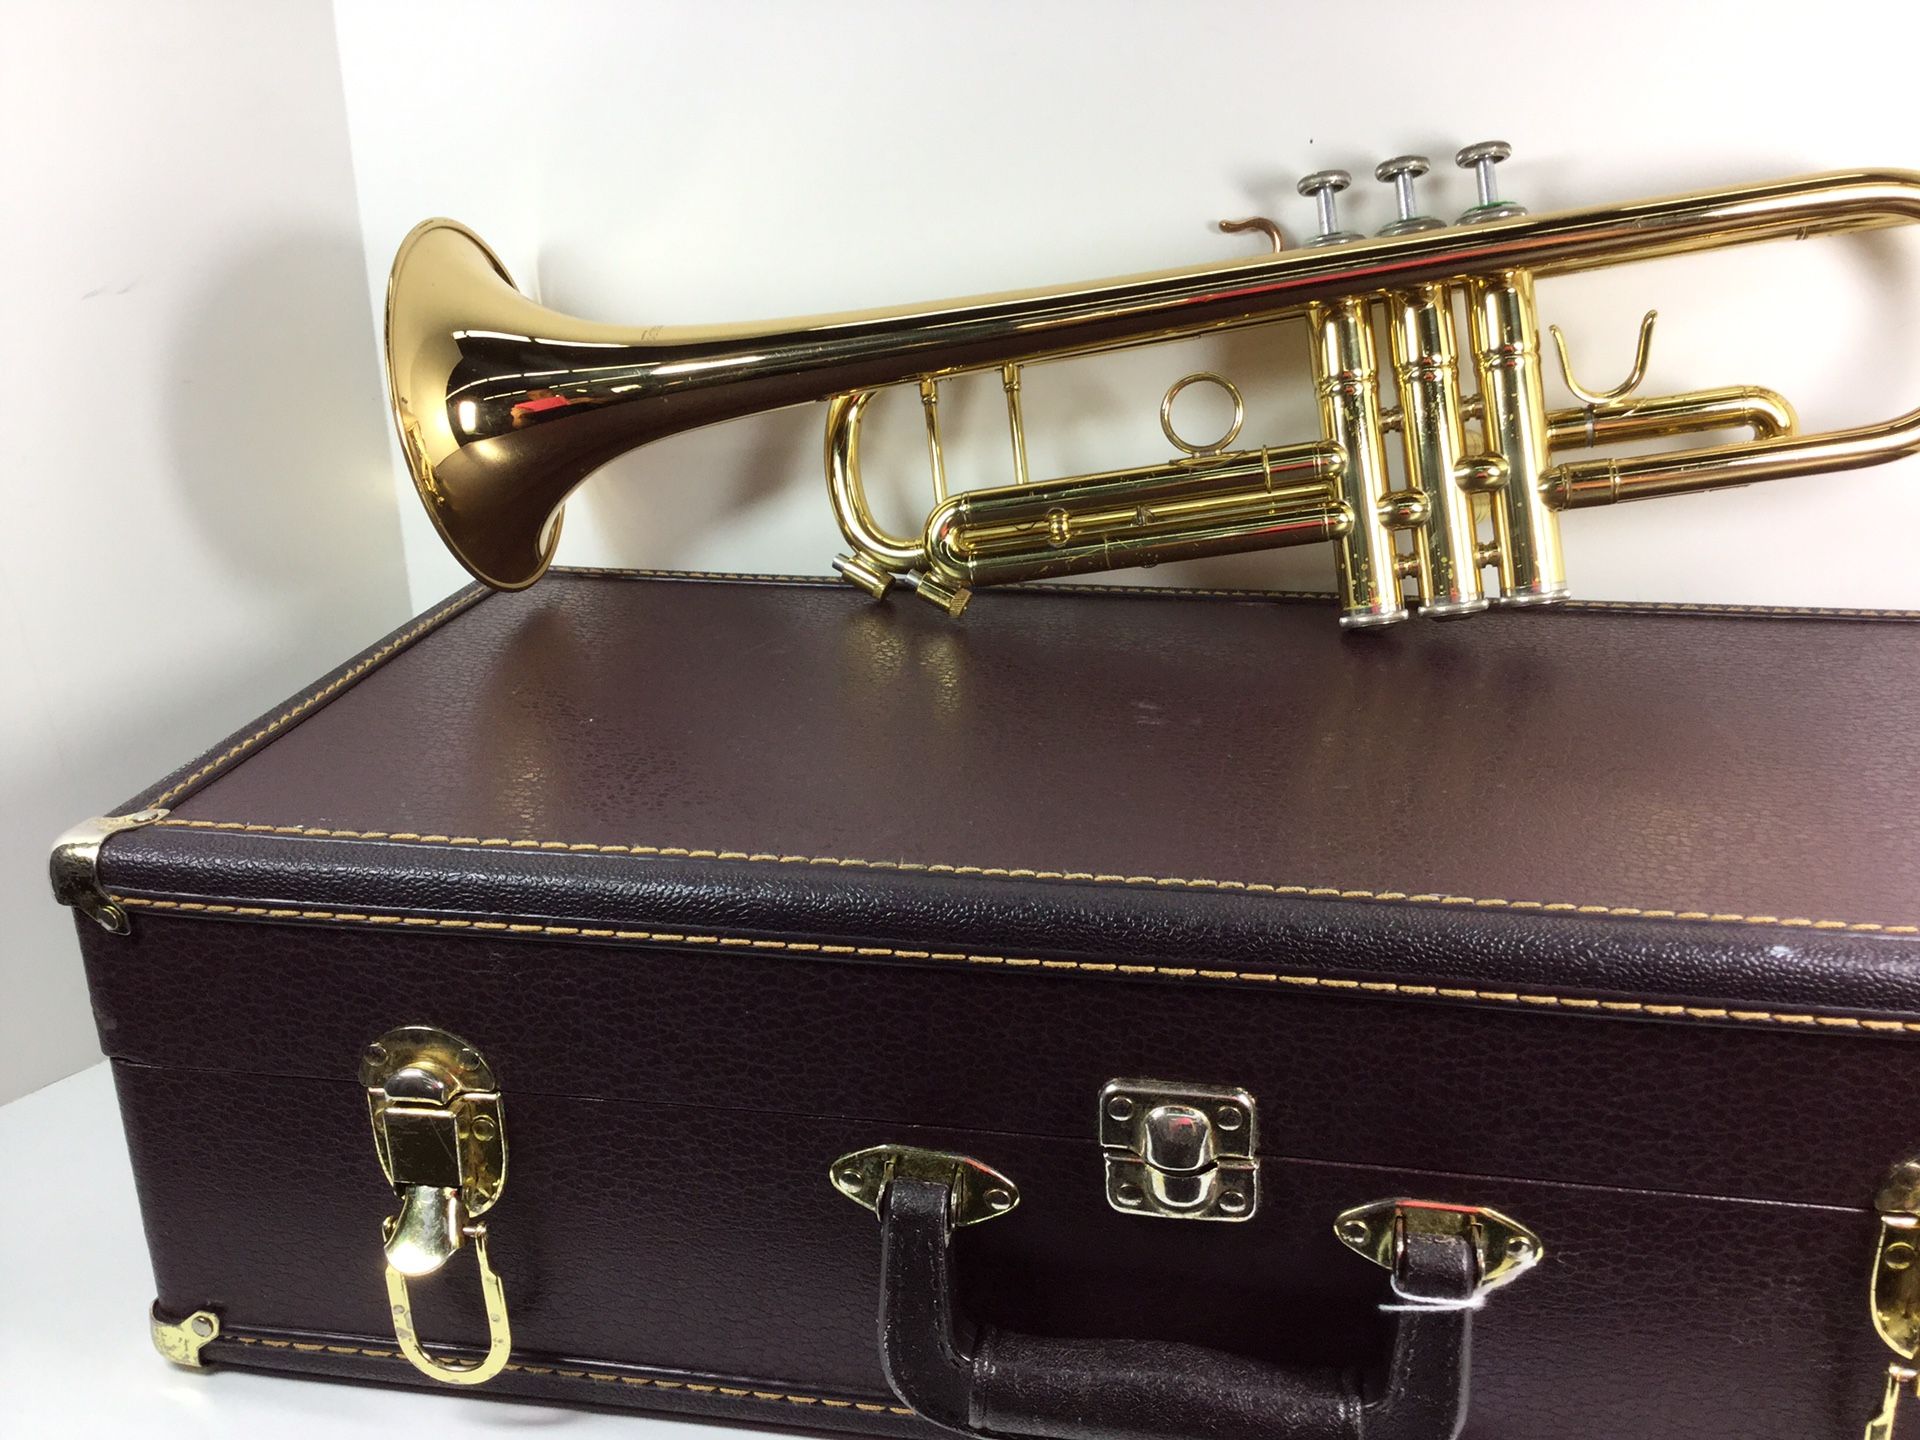 Montreux Beginner / Intermediate Trumpet with Hard Case